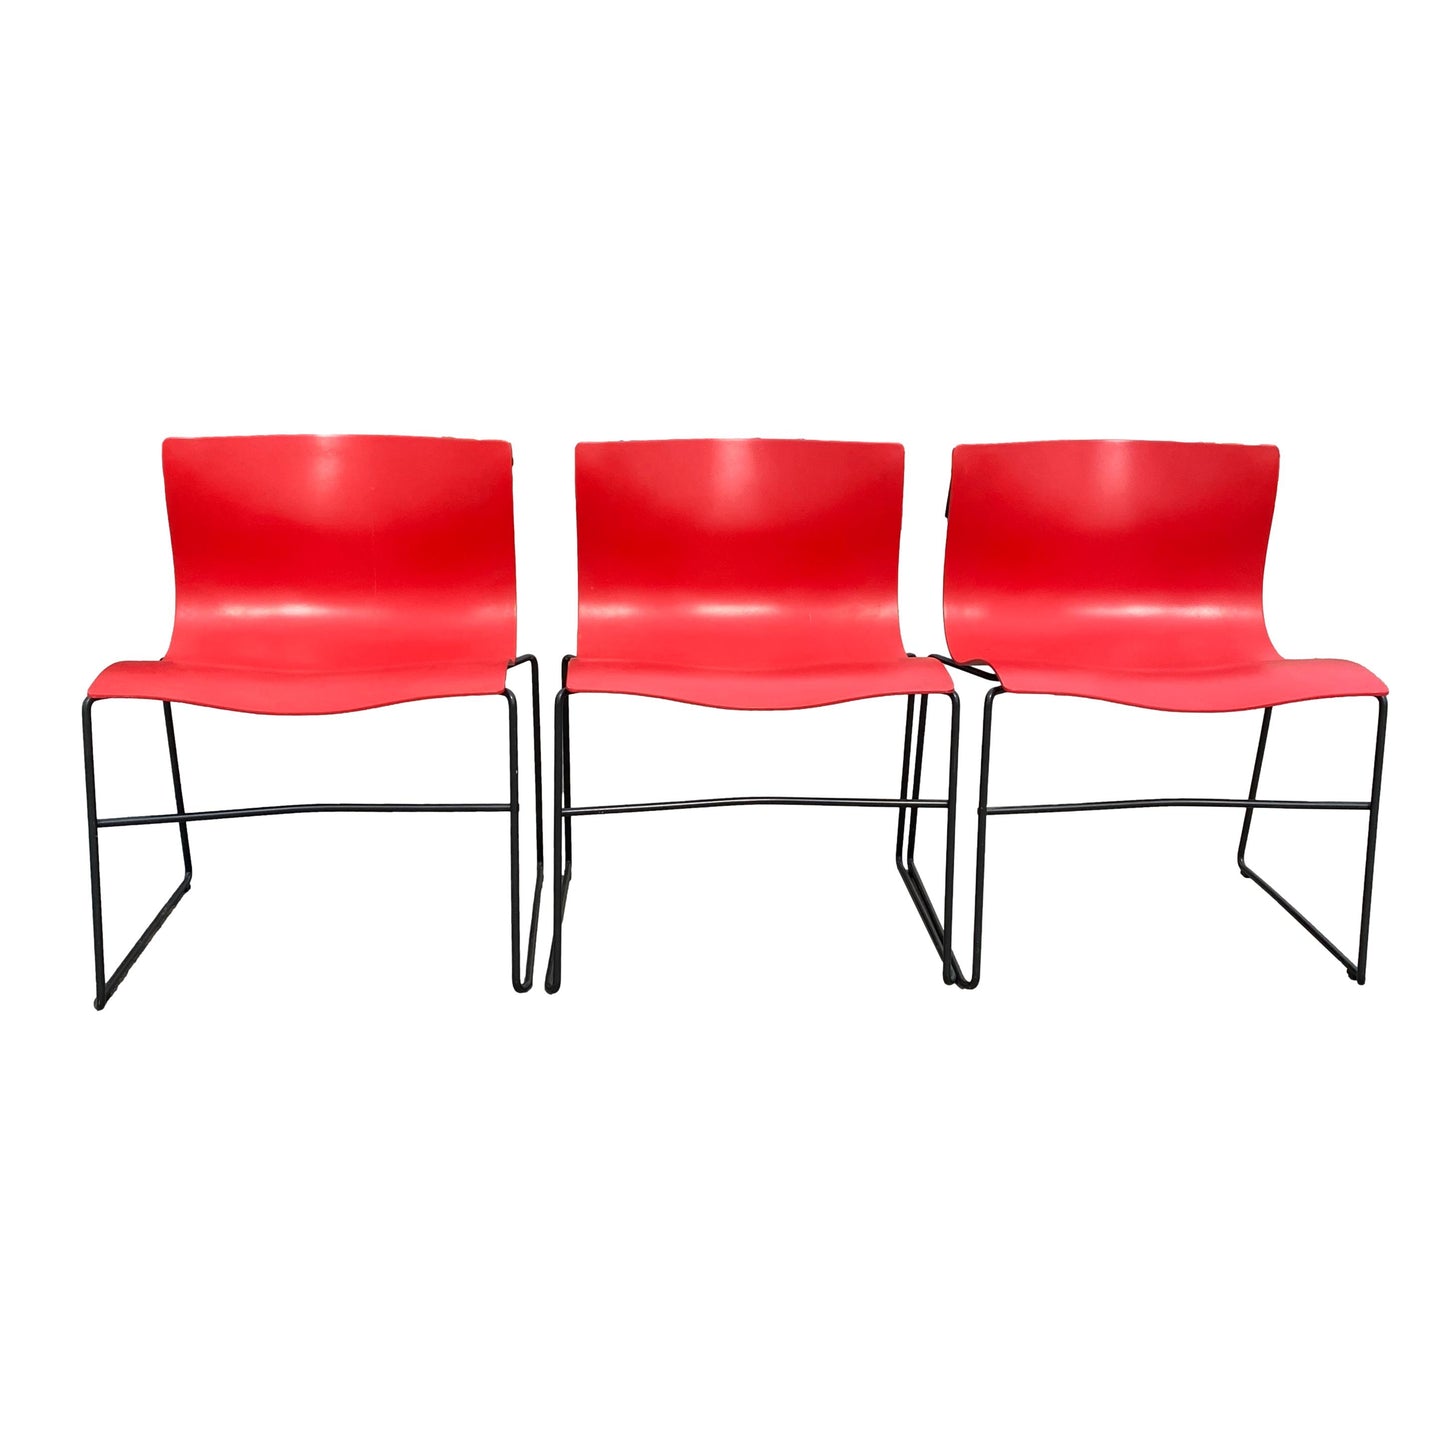 Set of 3 Knoll Handkerchief Chairs